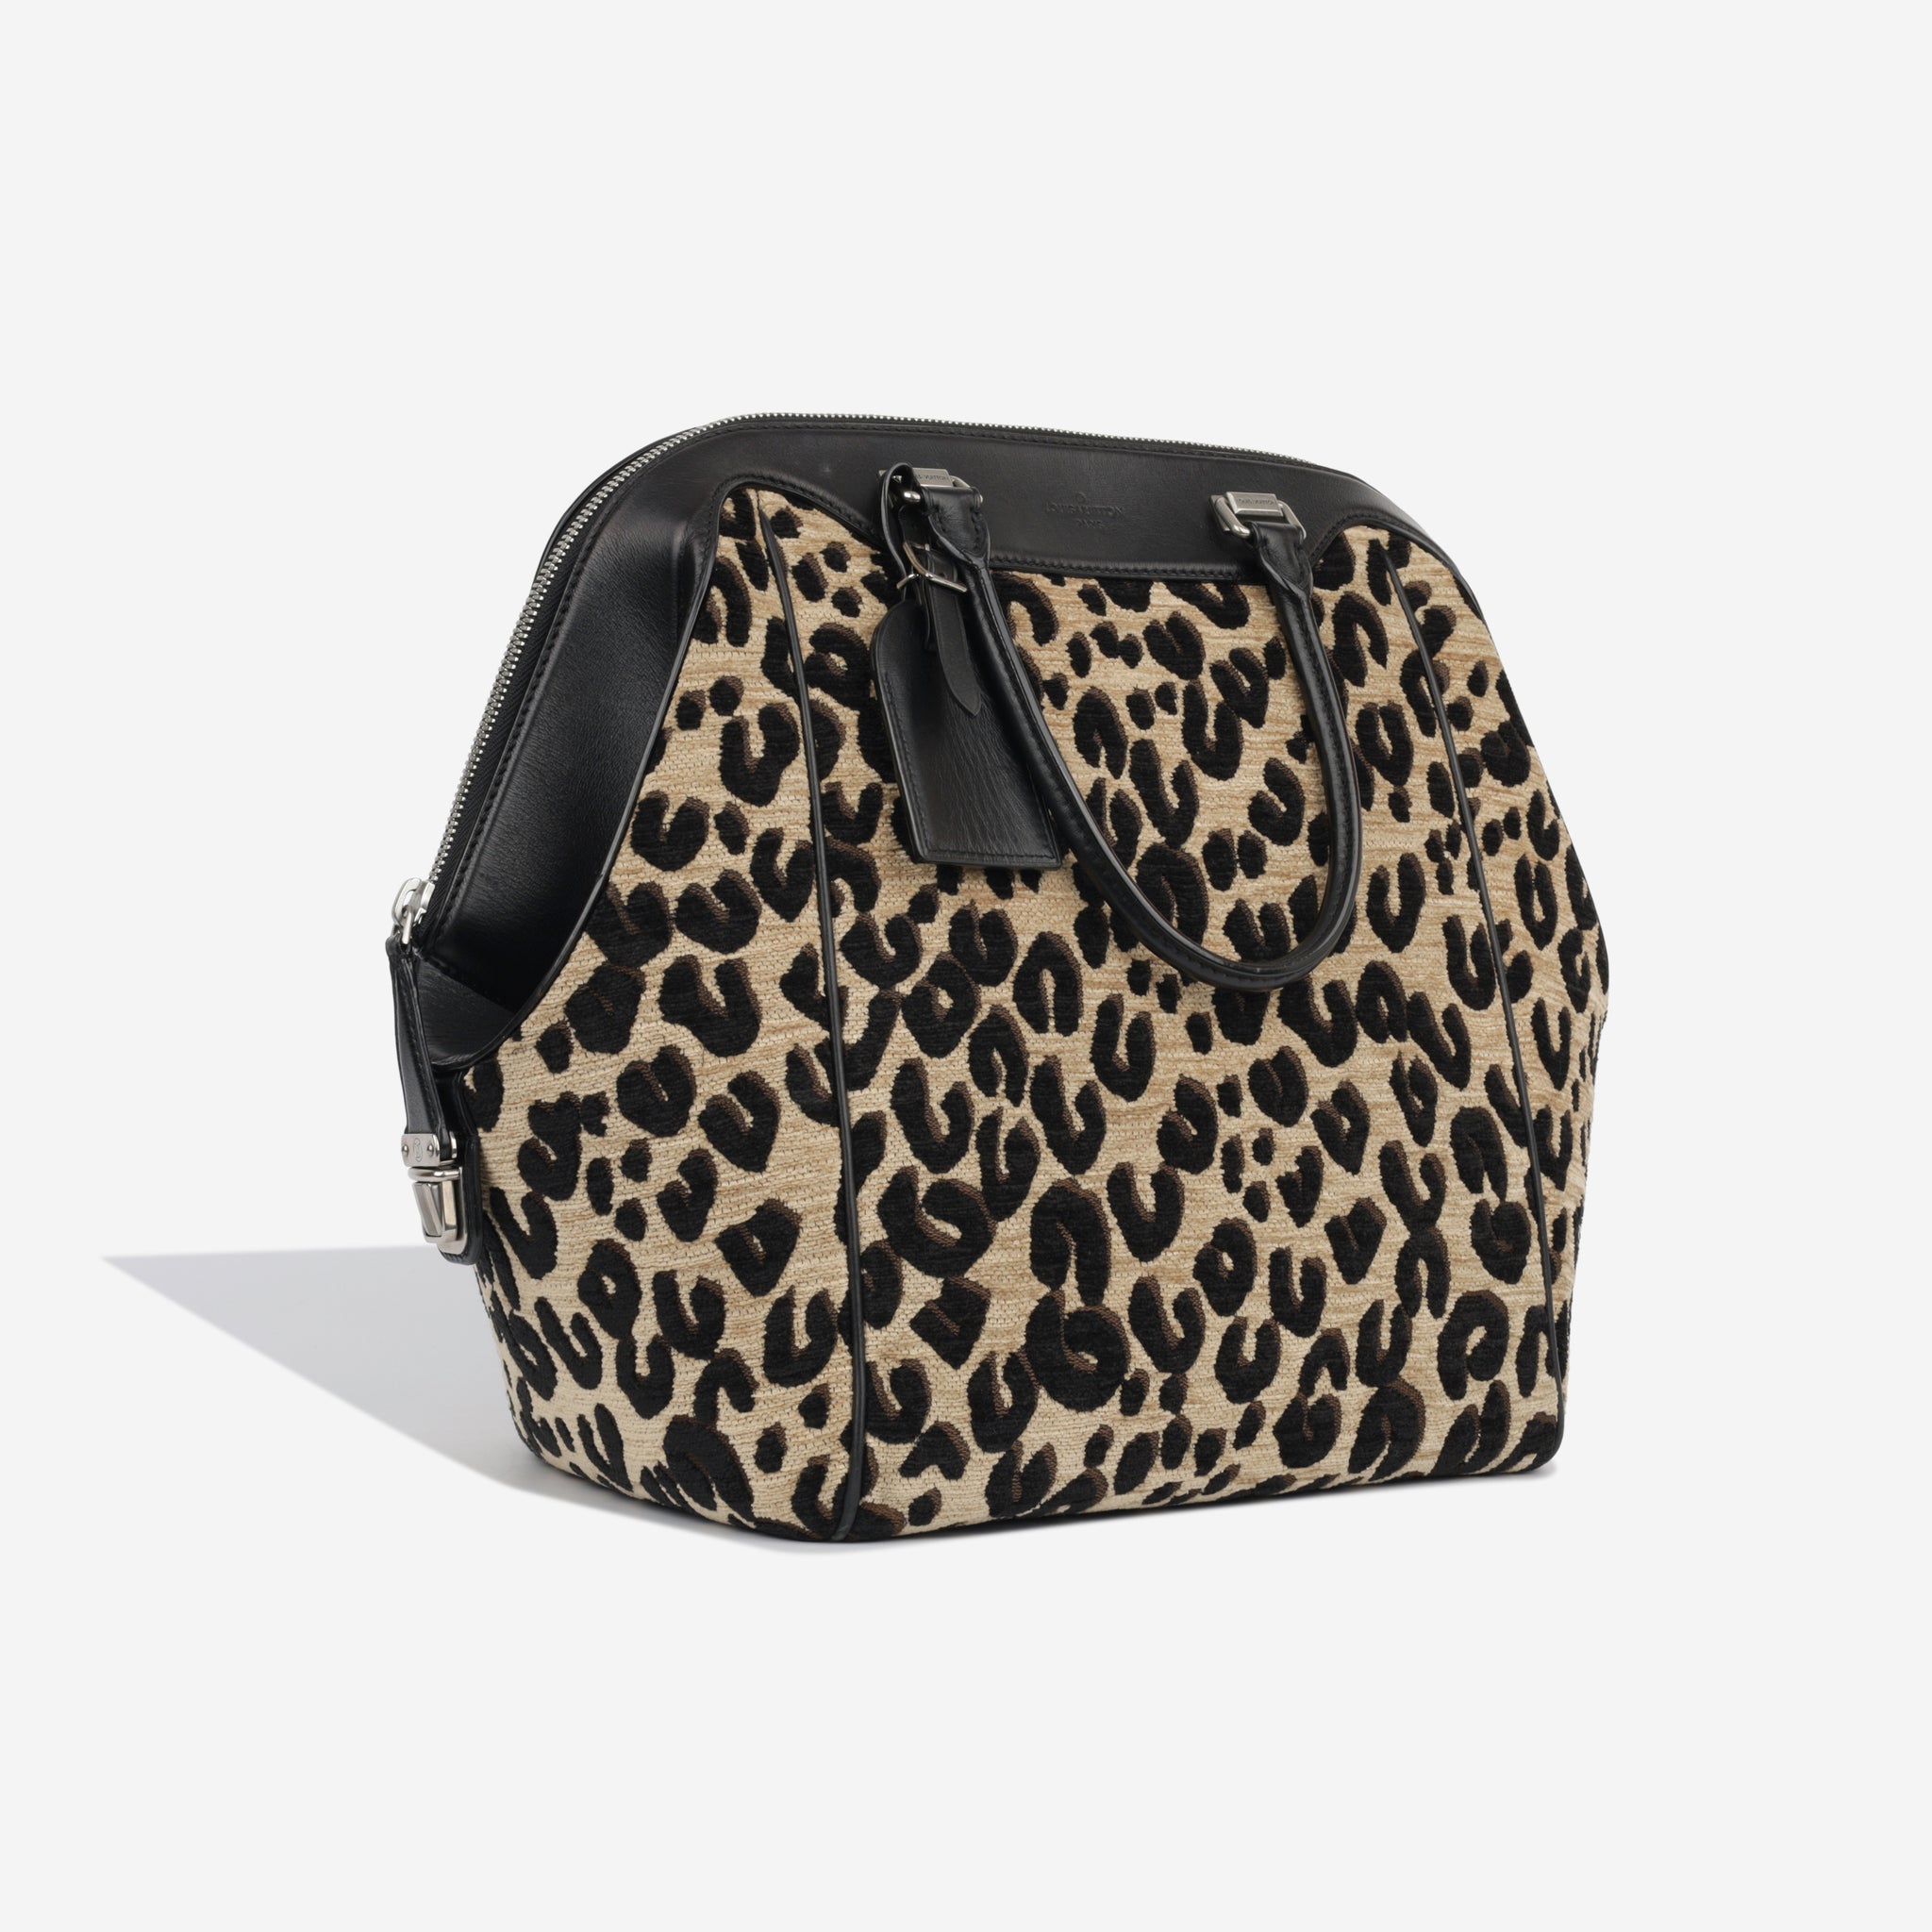 Louis Vuitton Stephen Sprouse Leopard North South Bag